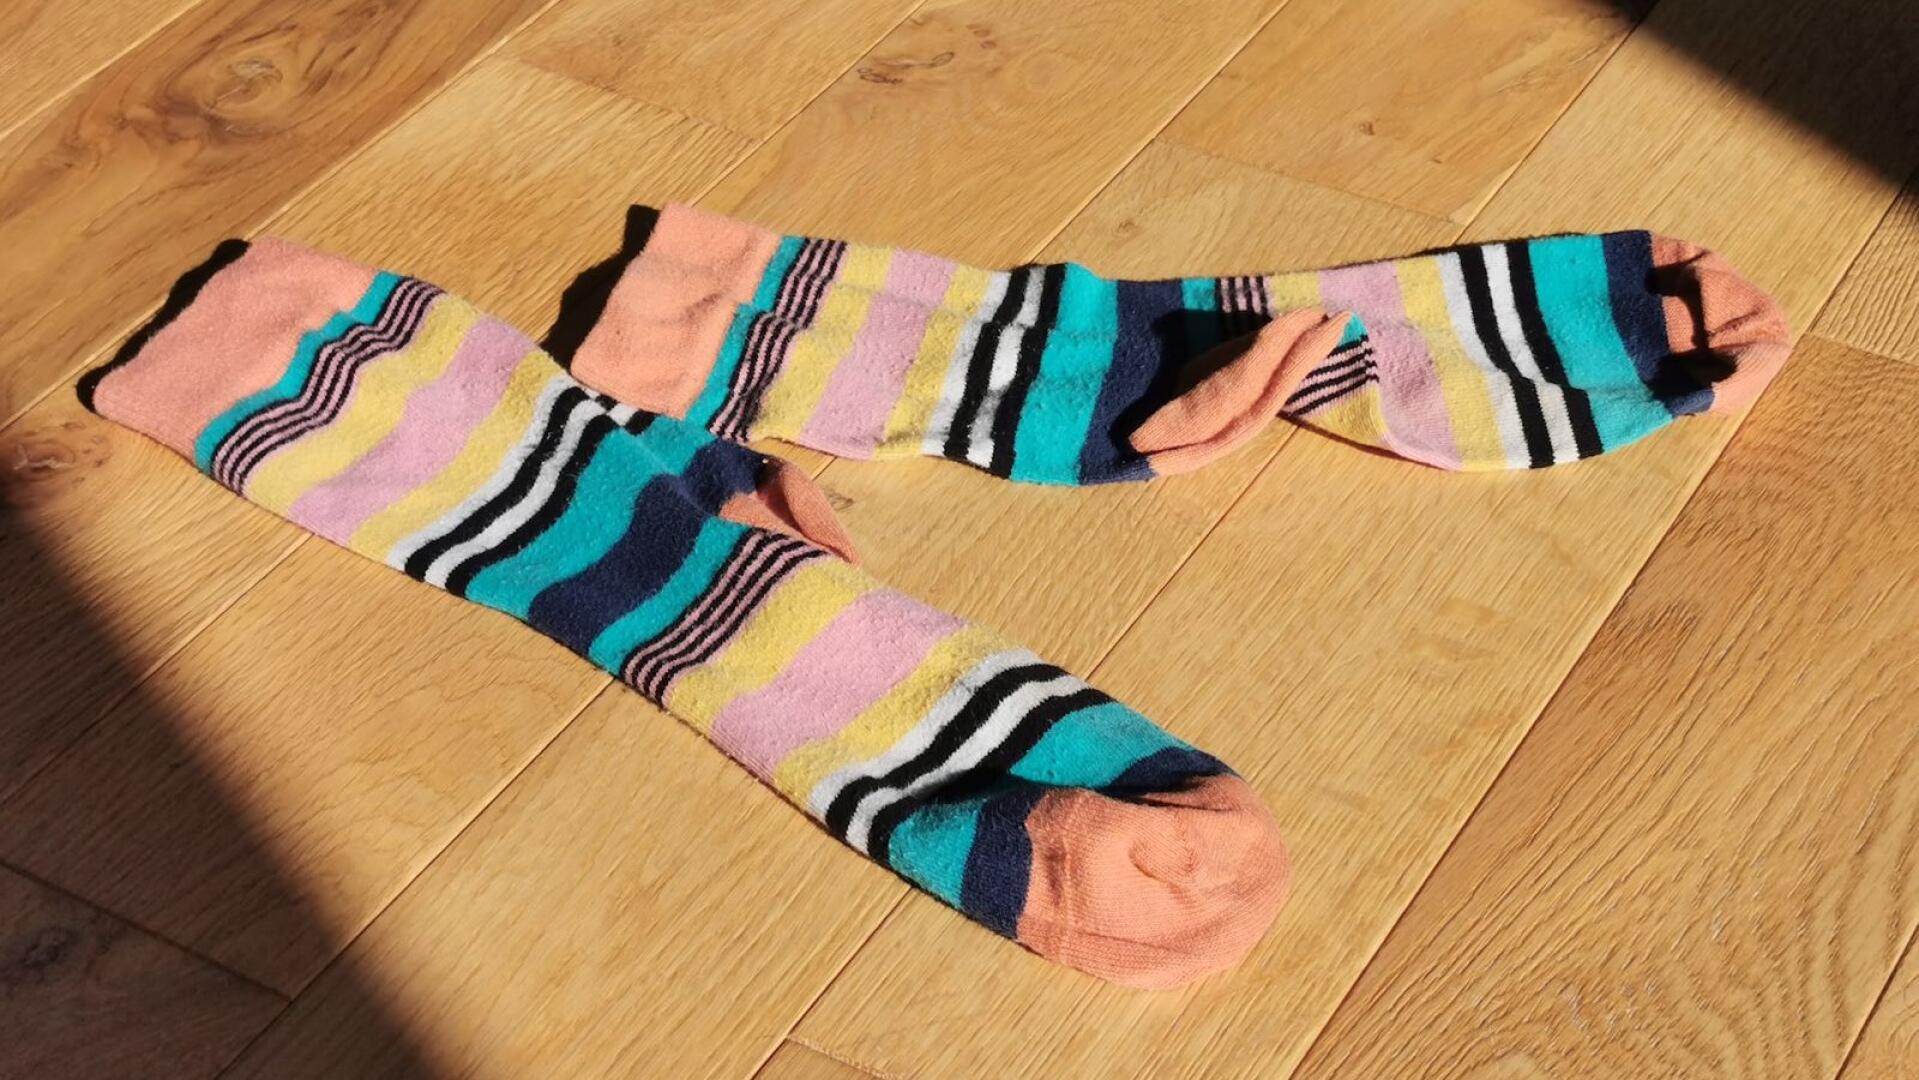 Pair of striped socks on the floor. 